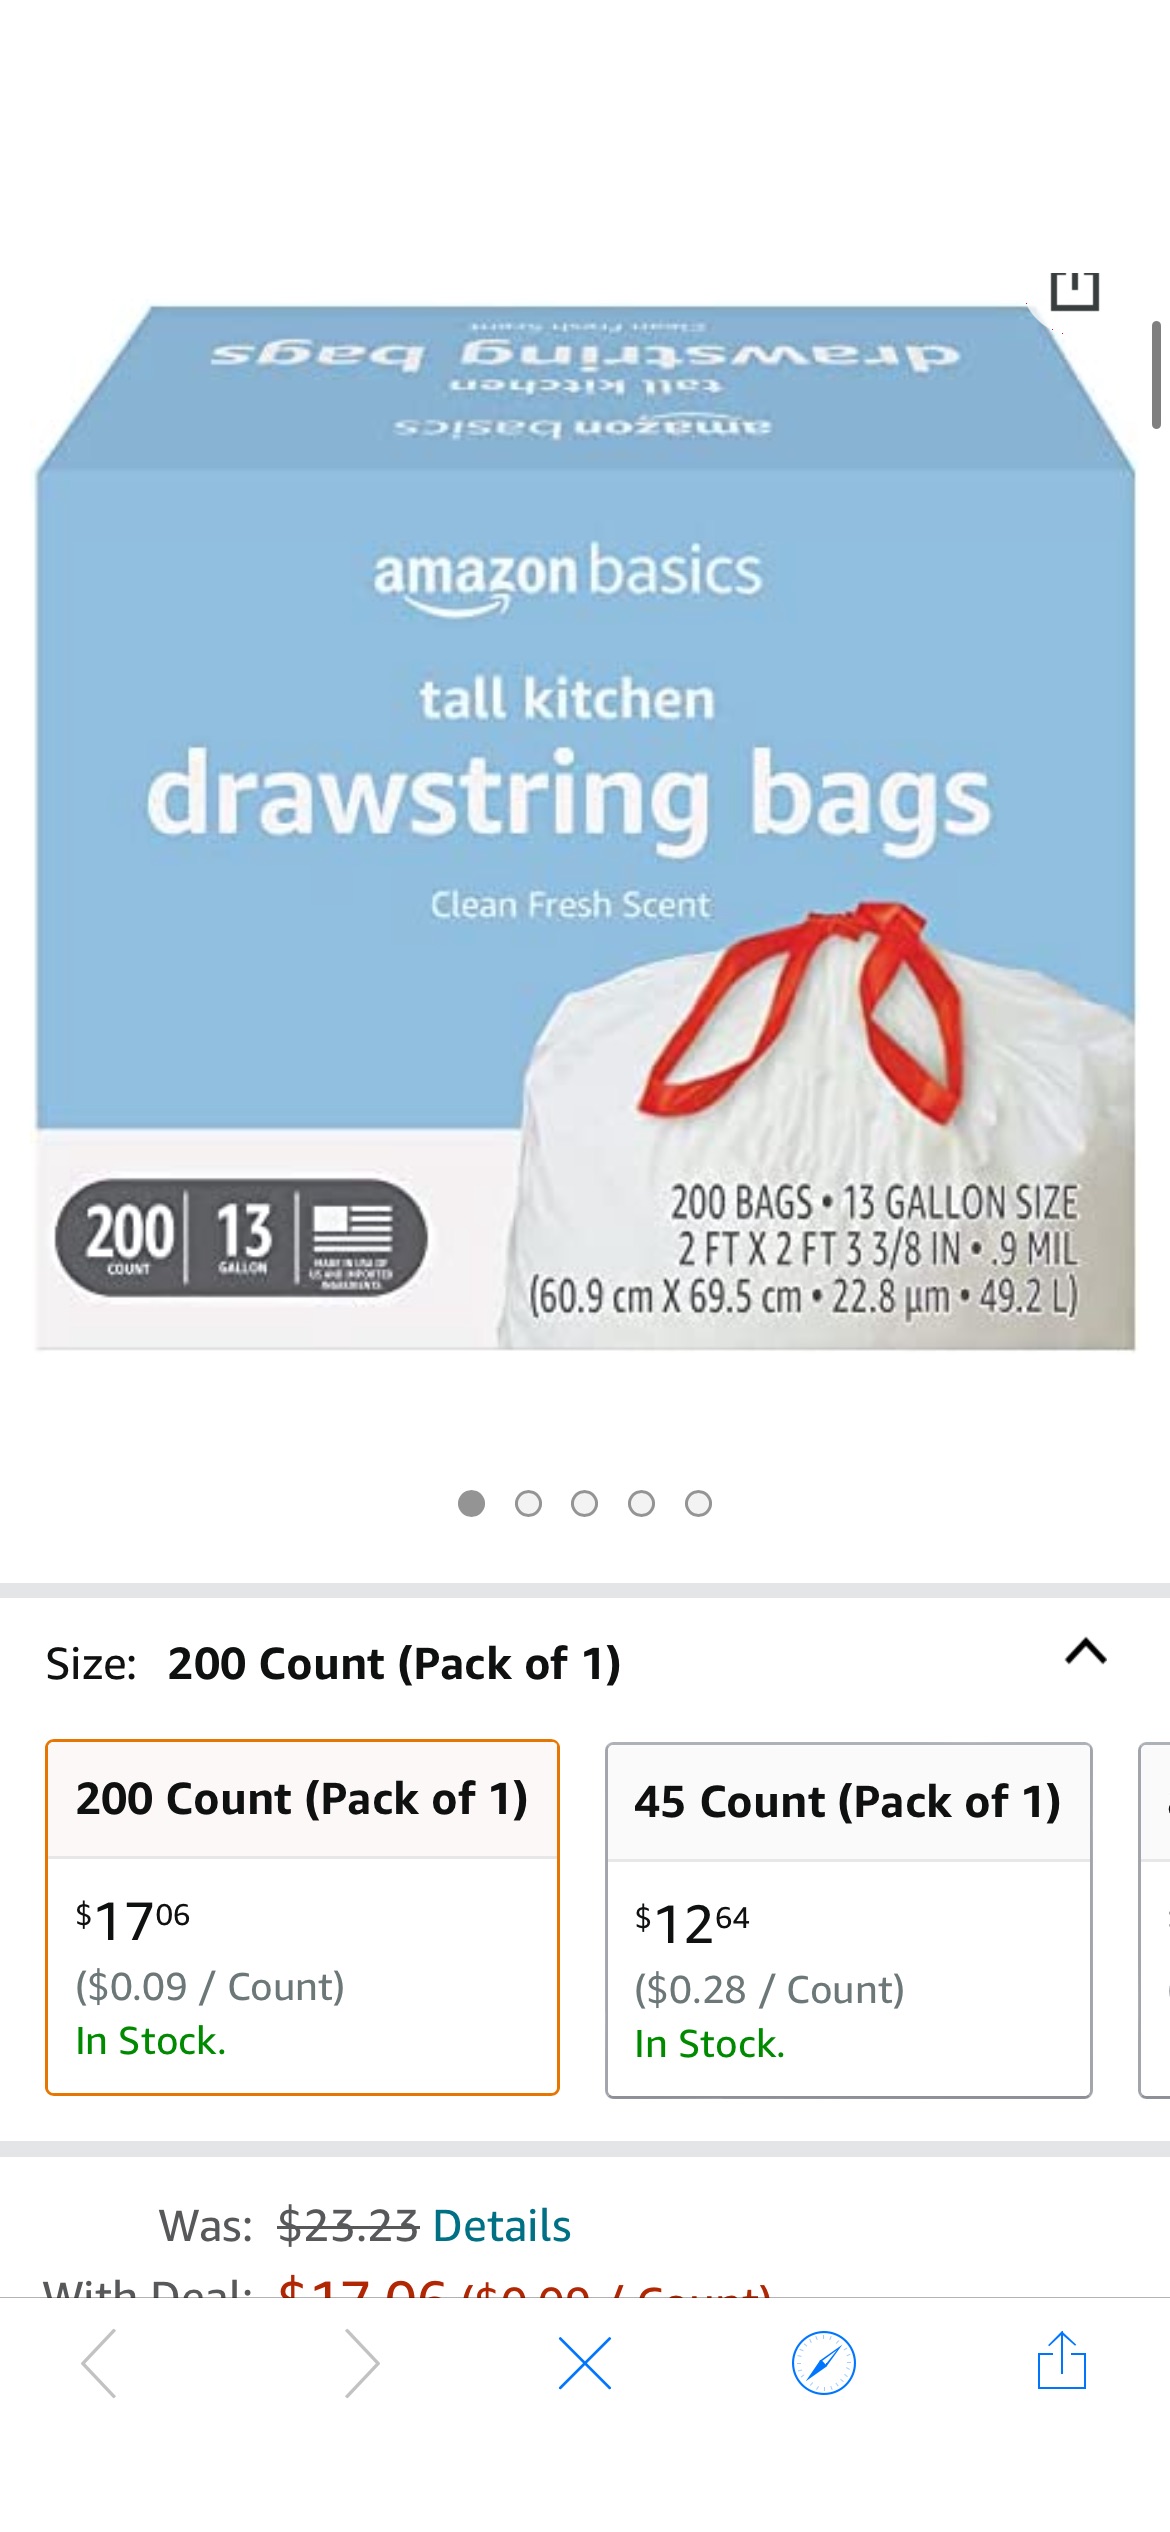 Amazon.com: Amazon Basics Tall Kitchen Drawstring Trash Bags, Clean Fresh Scent, 13 Gallon, 200 Count (Previously Solimo)